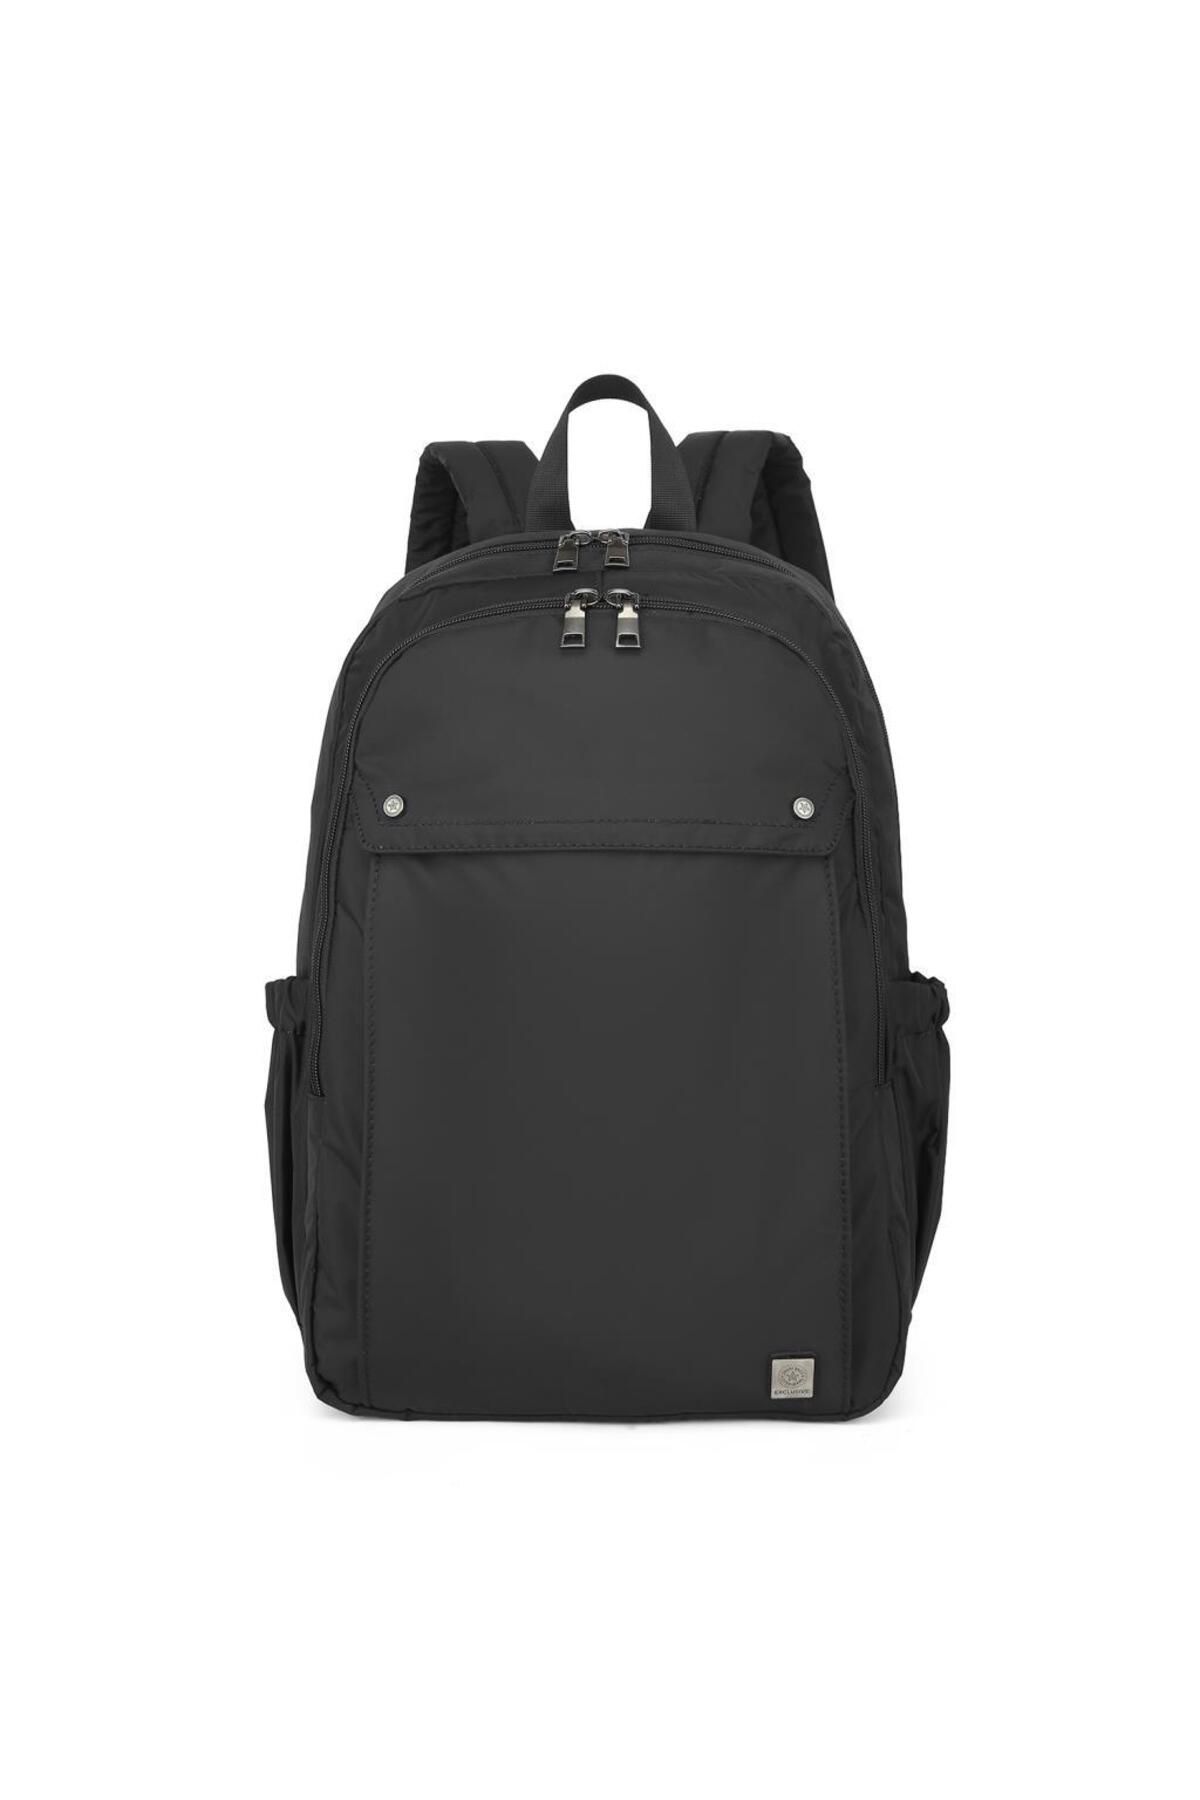 Smart Bags Exclusive Serisi Uniseks Sırt Çantası Smart Bags 8702